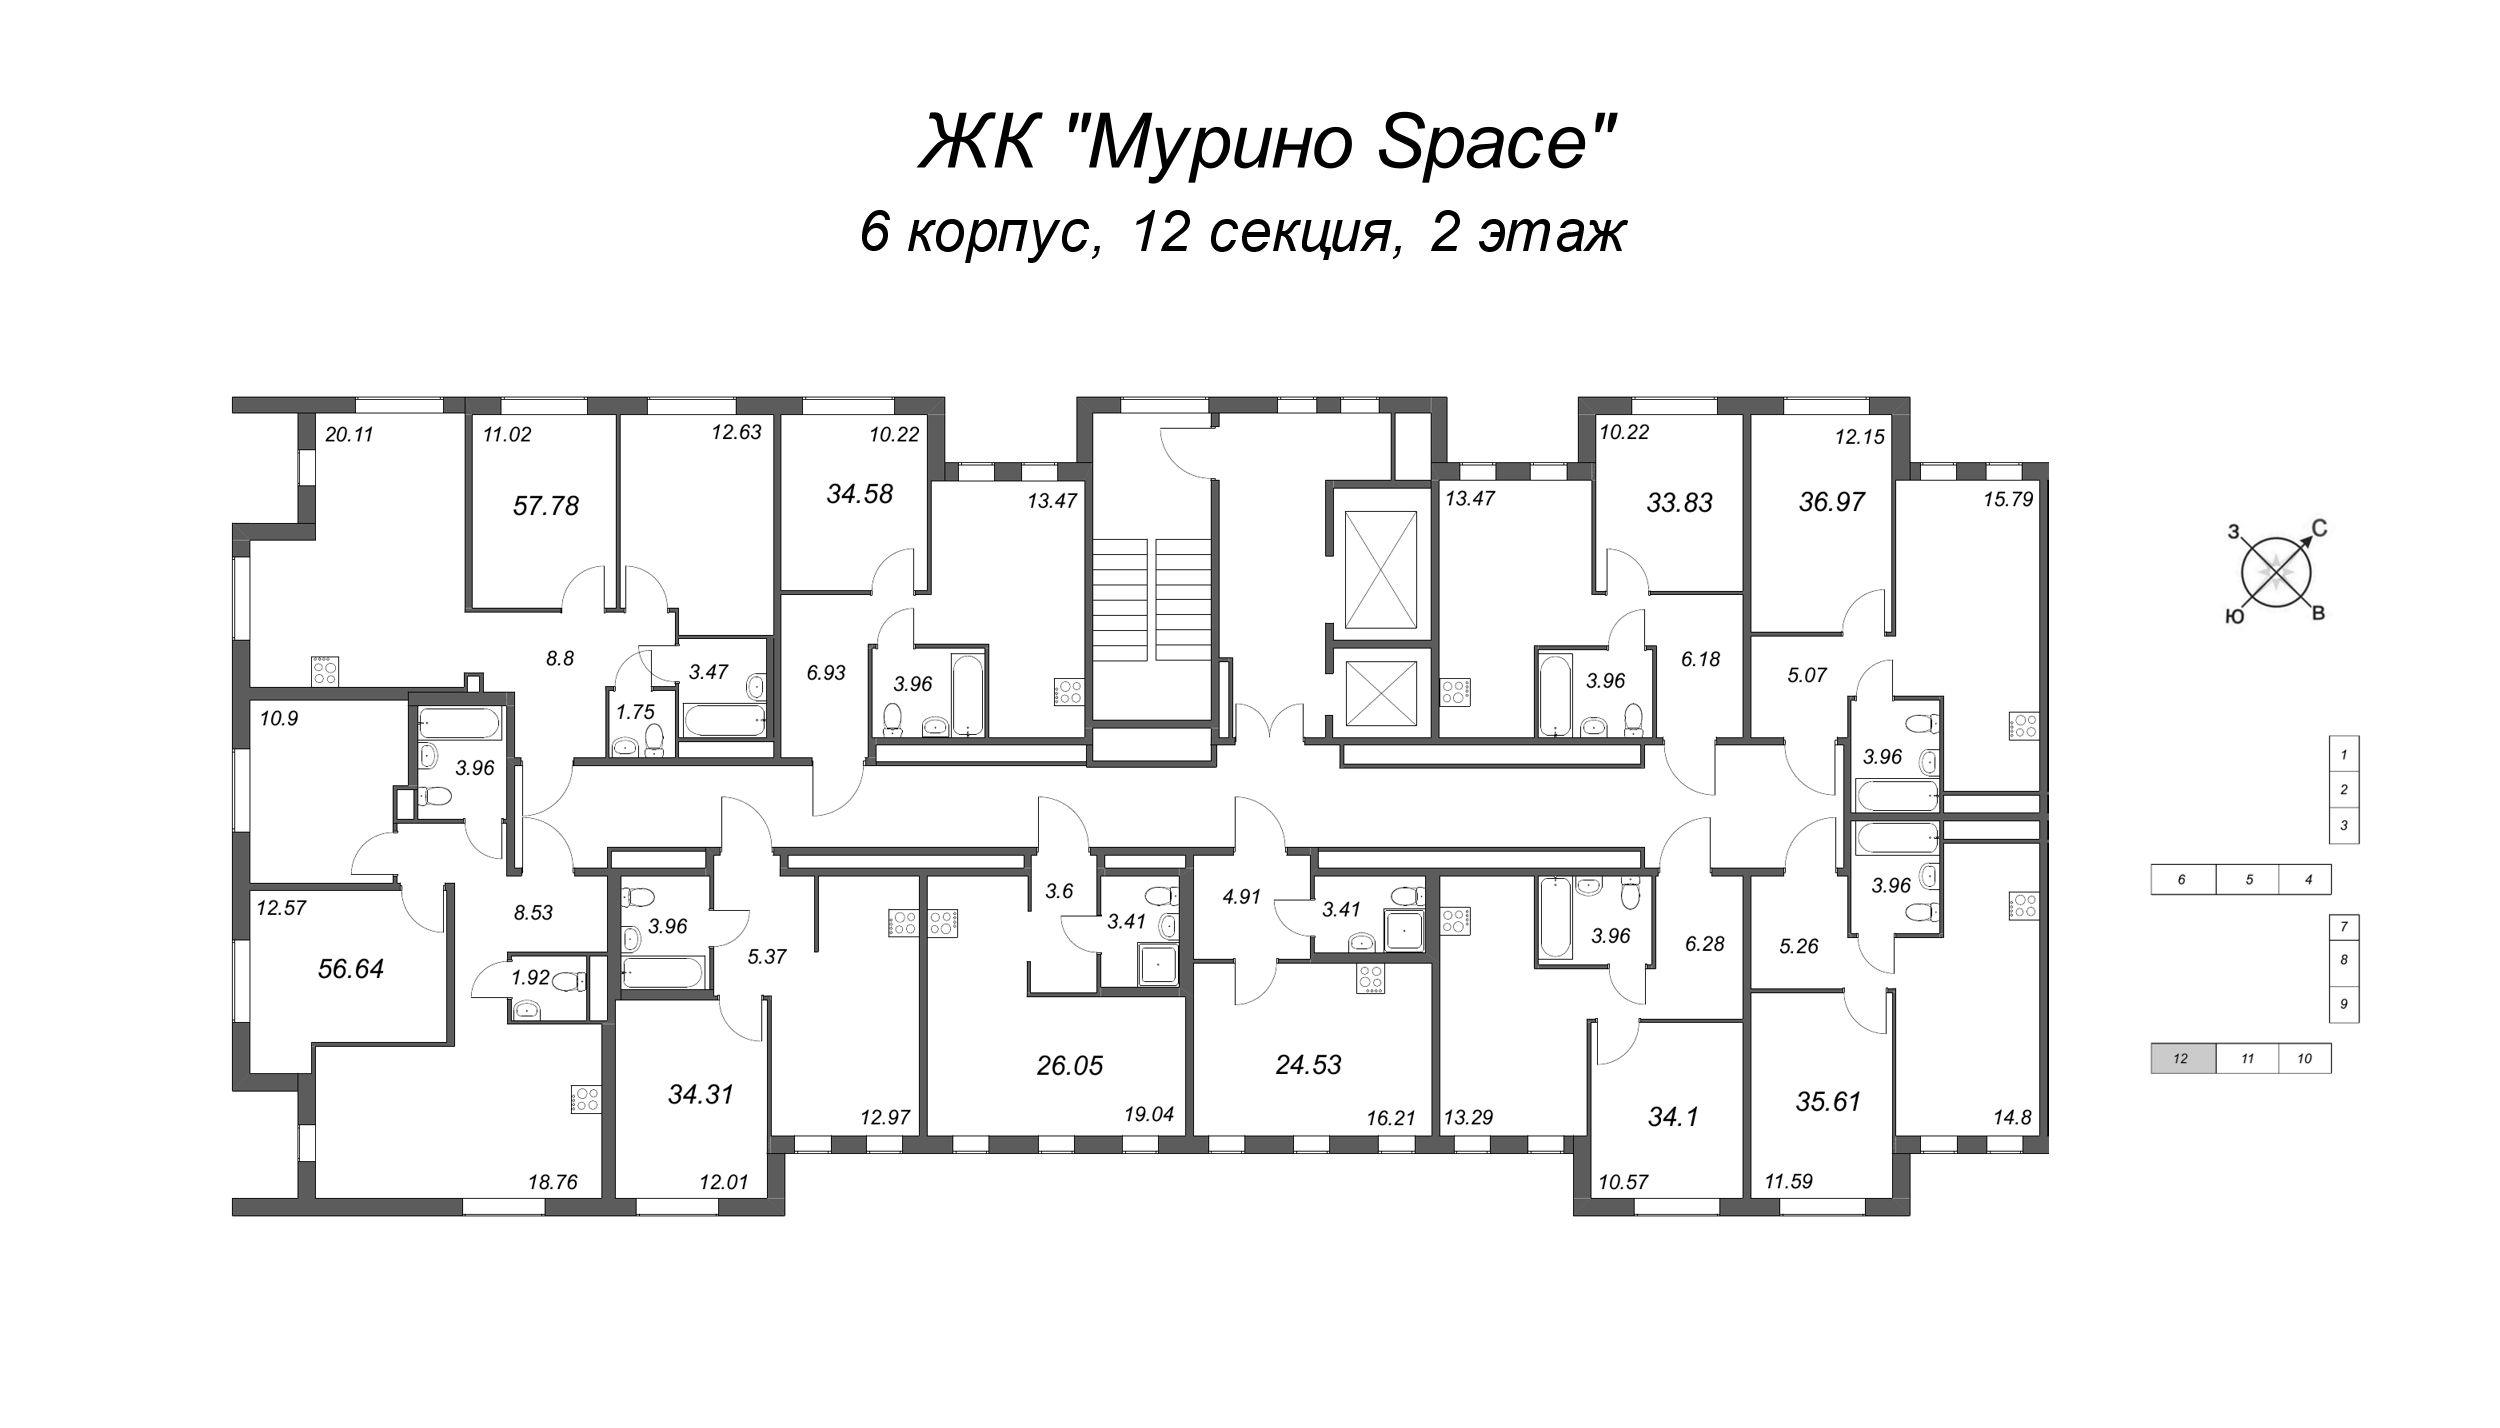 3-комнатная (Евро) квартира, 56.64 м² - планировка этажа